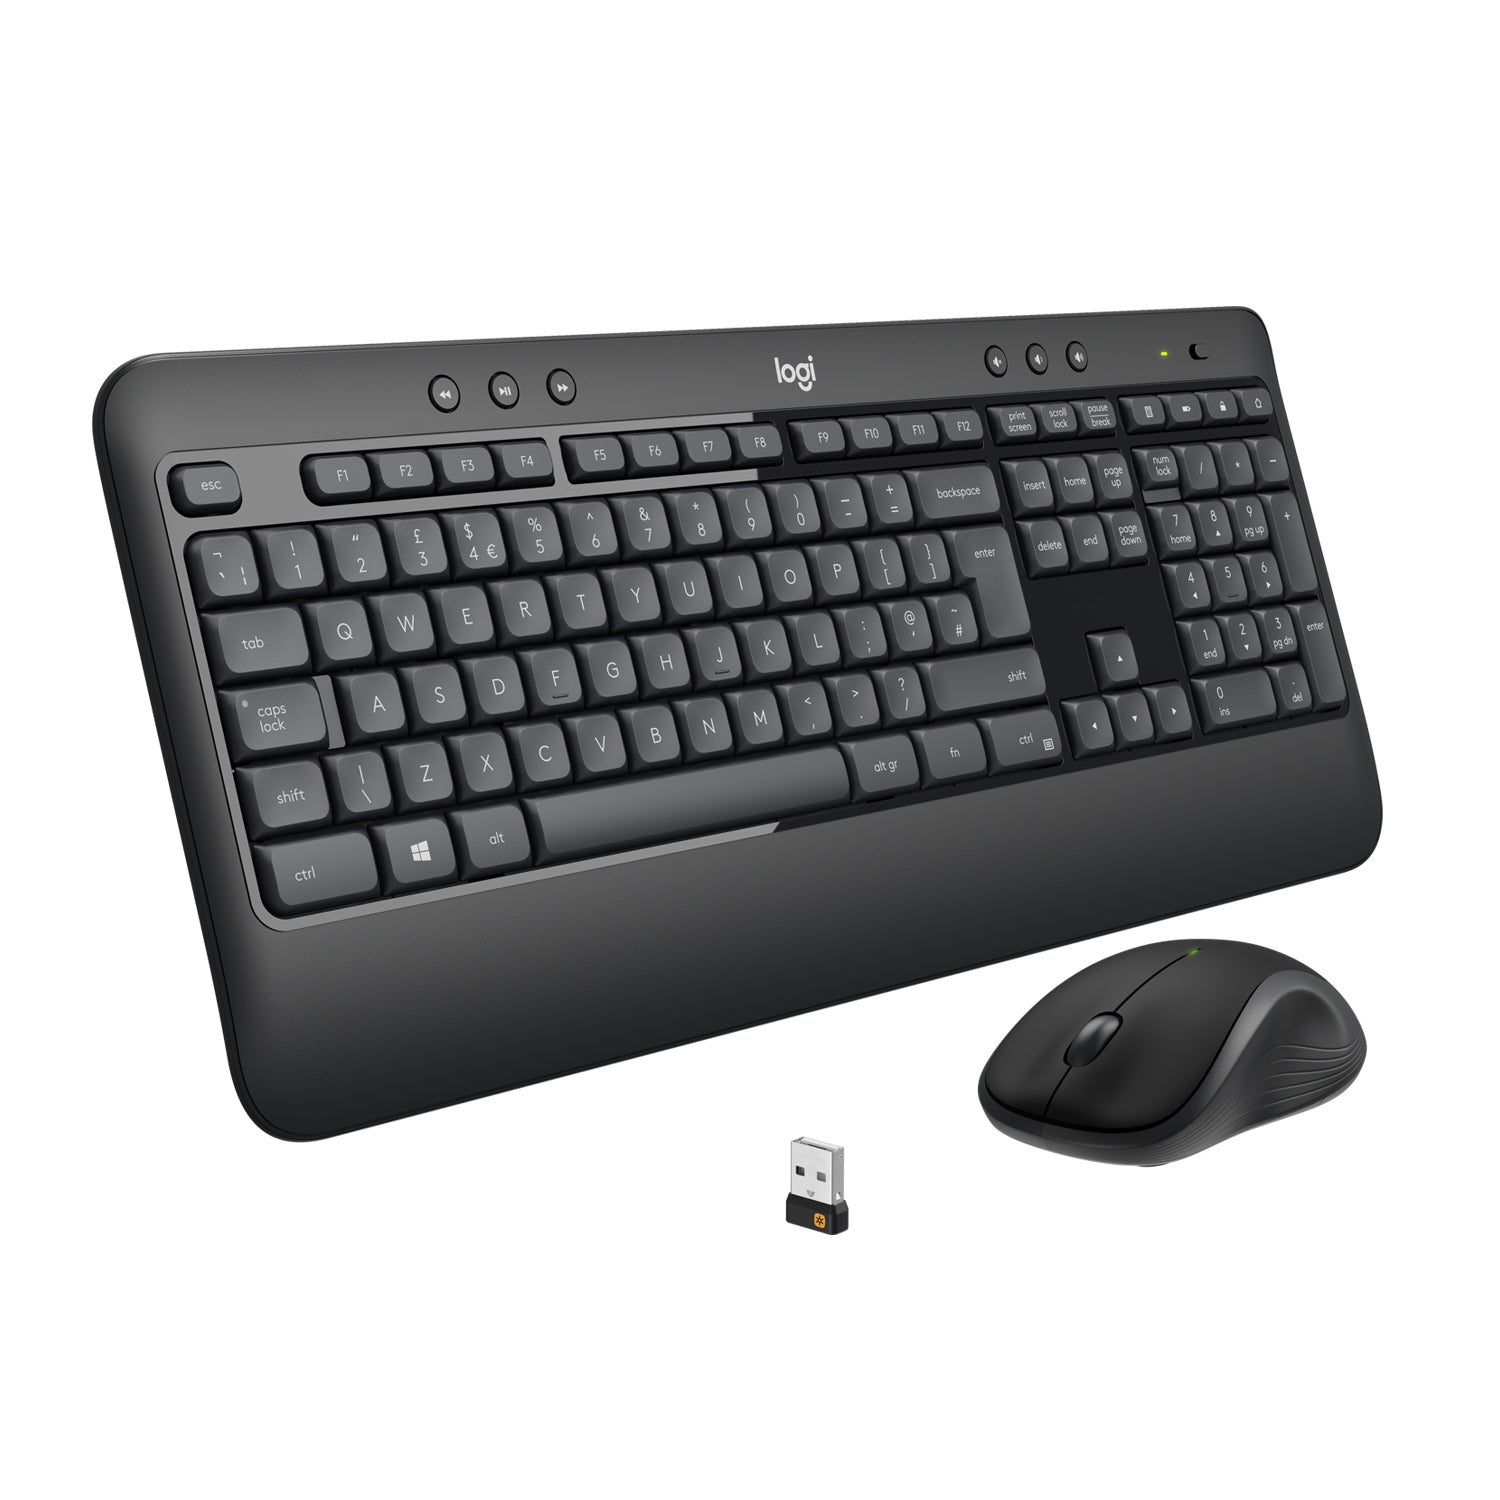 MK540 ADVANCED Wireless Keyboard and Mouse Combo